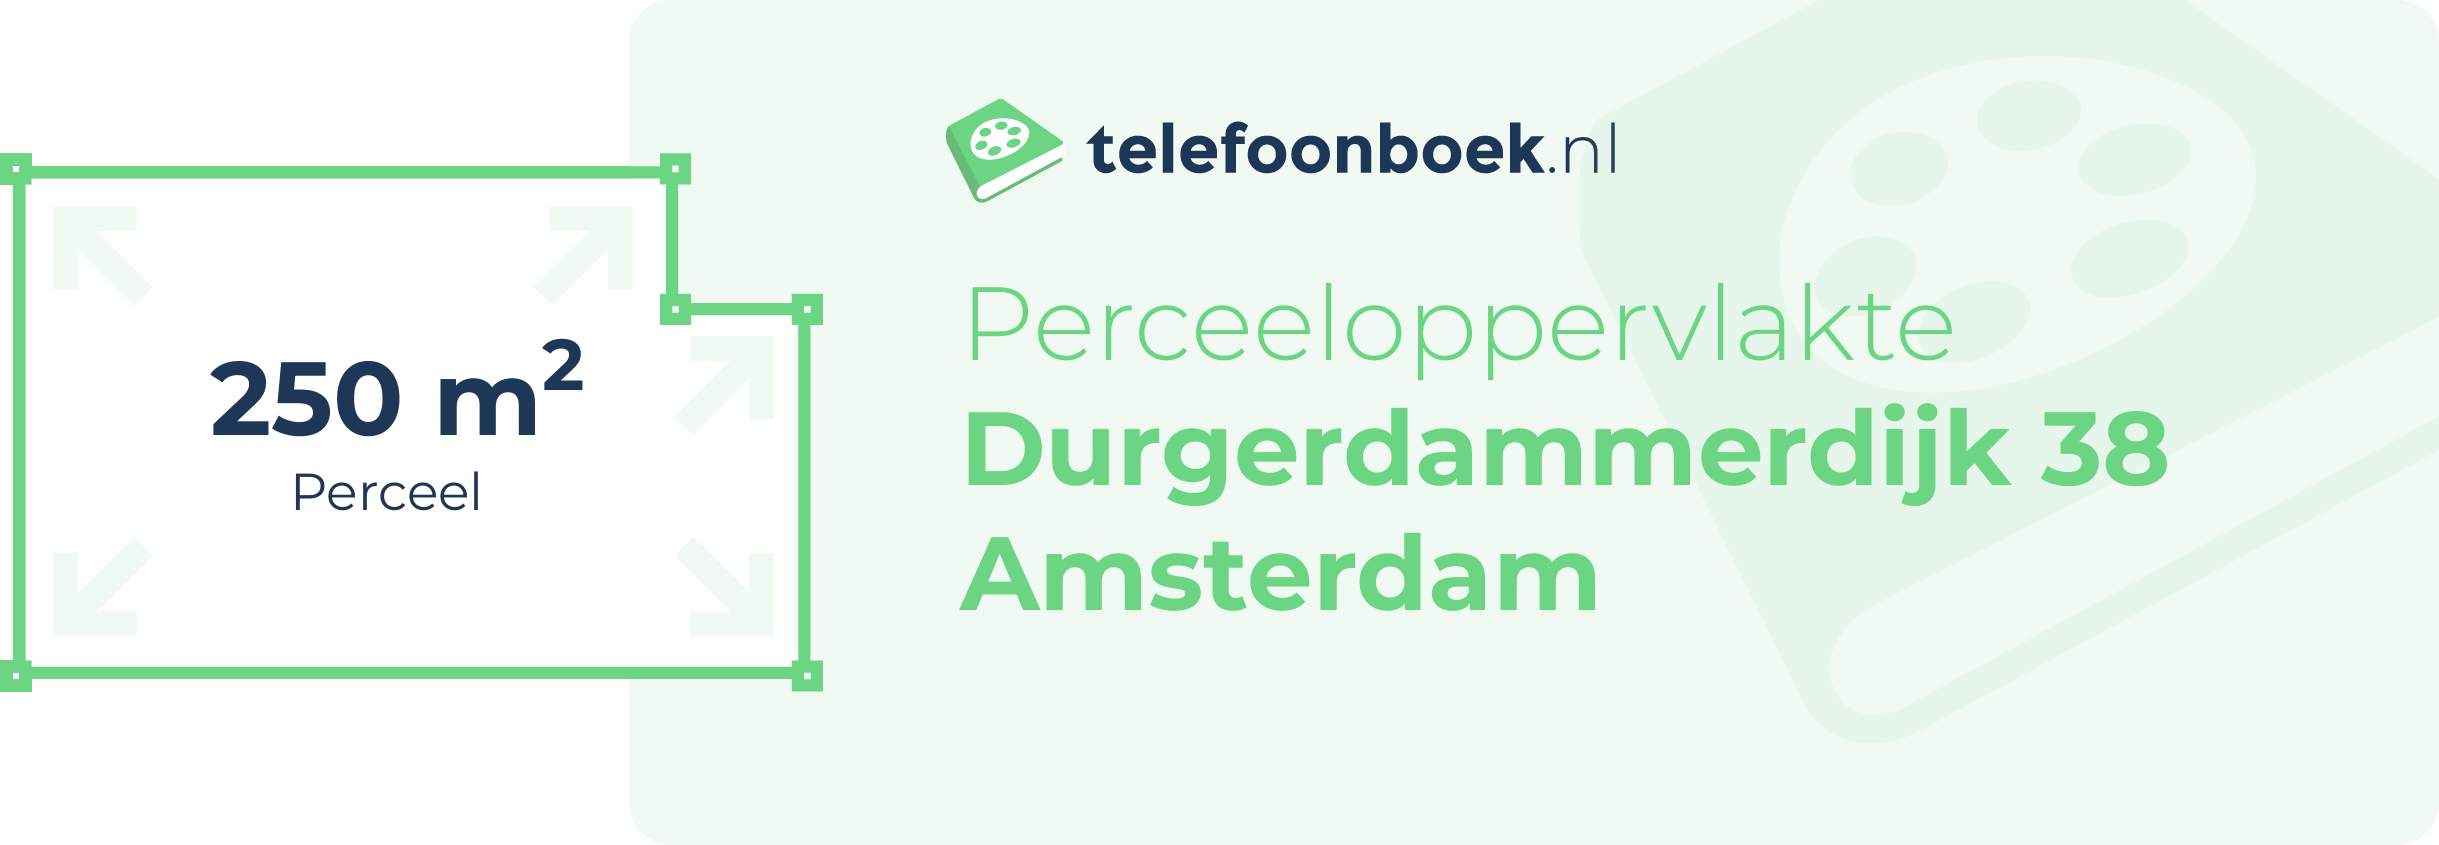 Perceeloppervlakte Durgerdammerdijk 38 Amsterdam